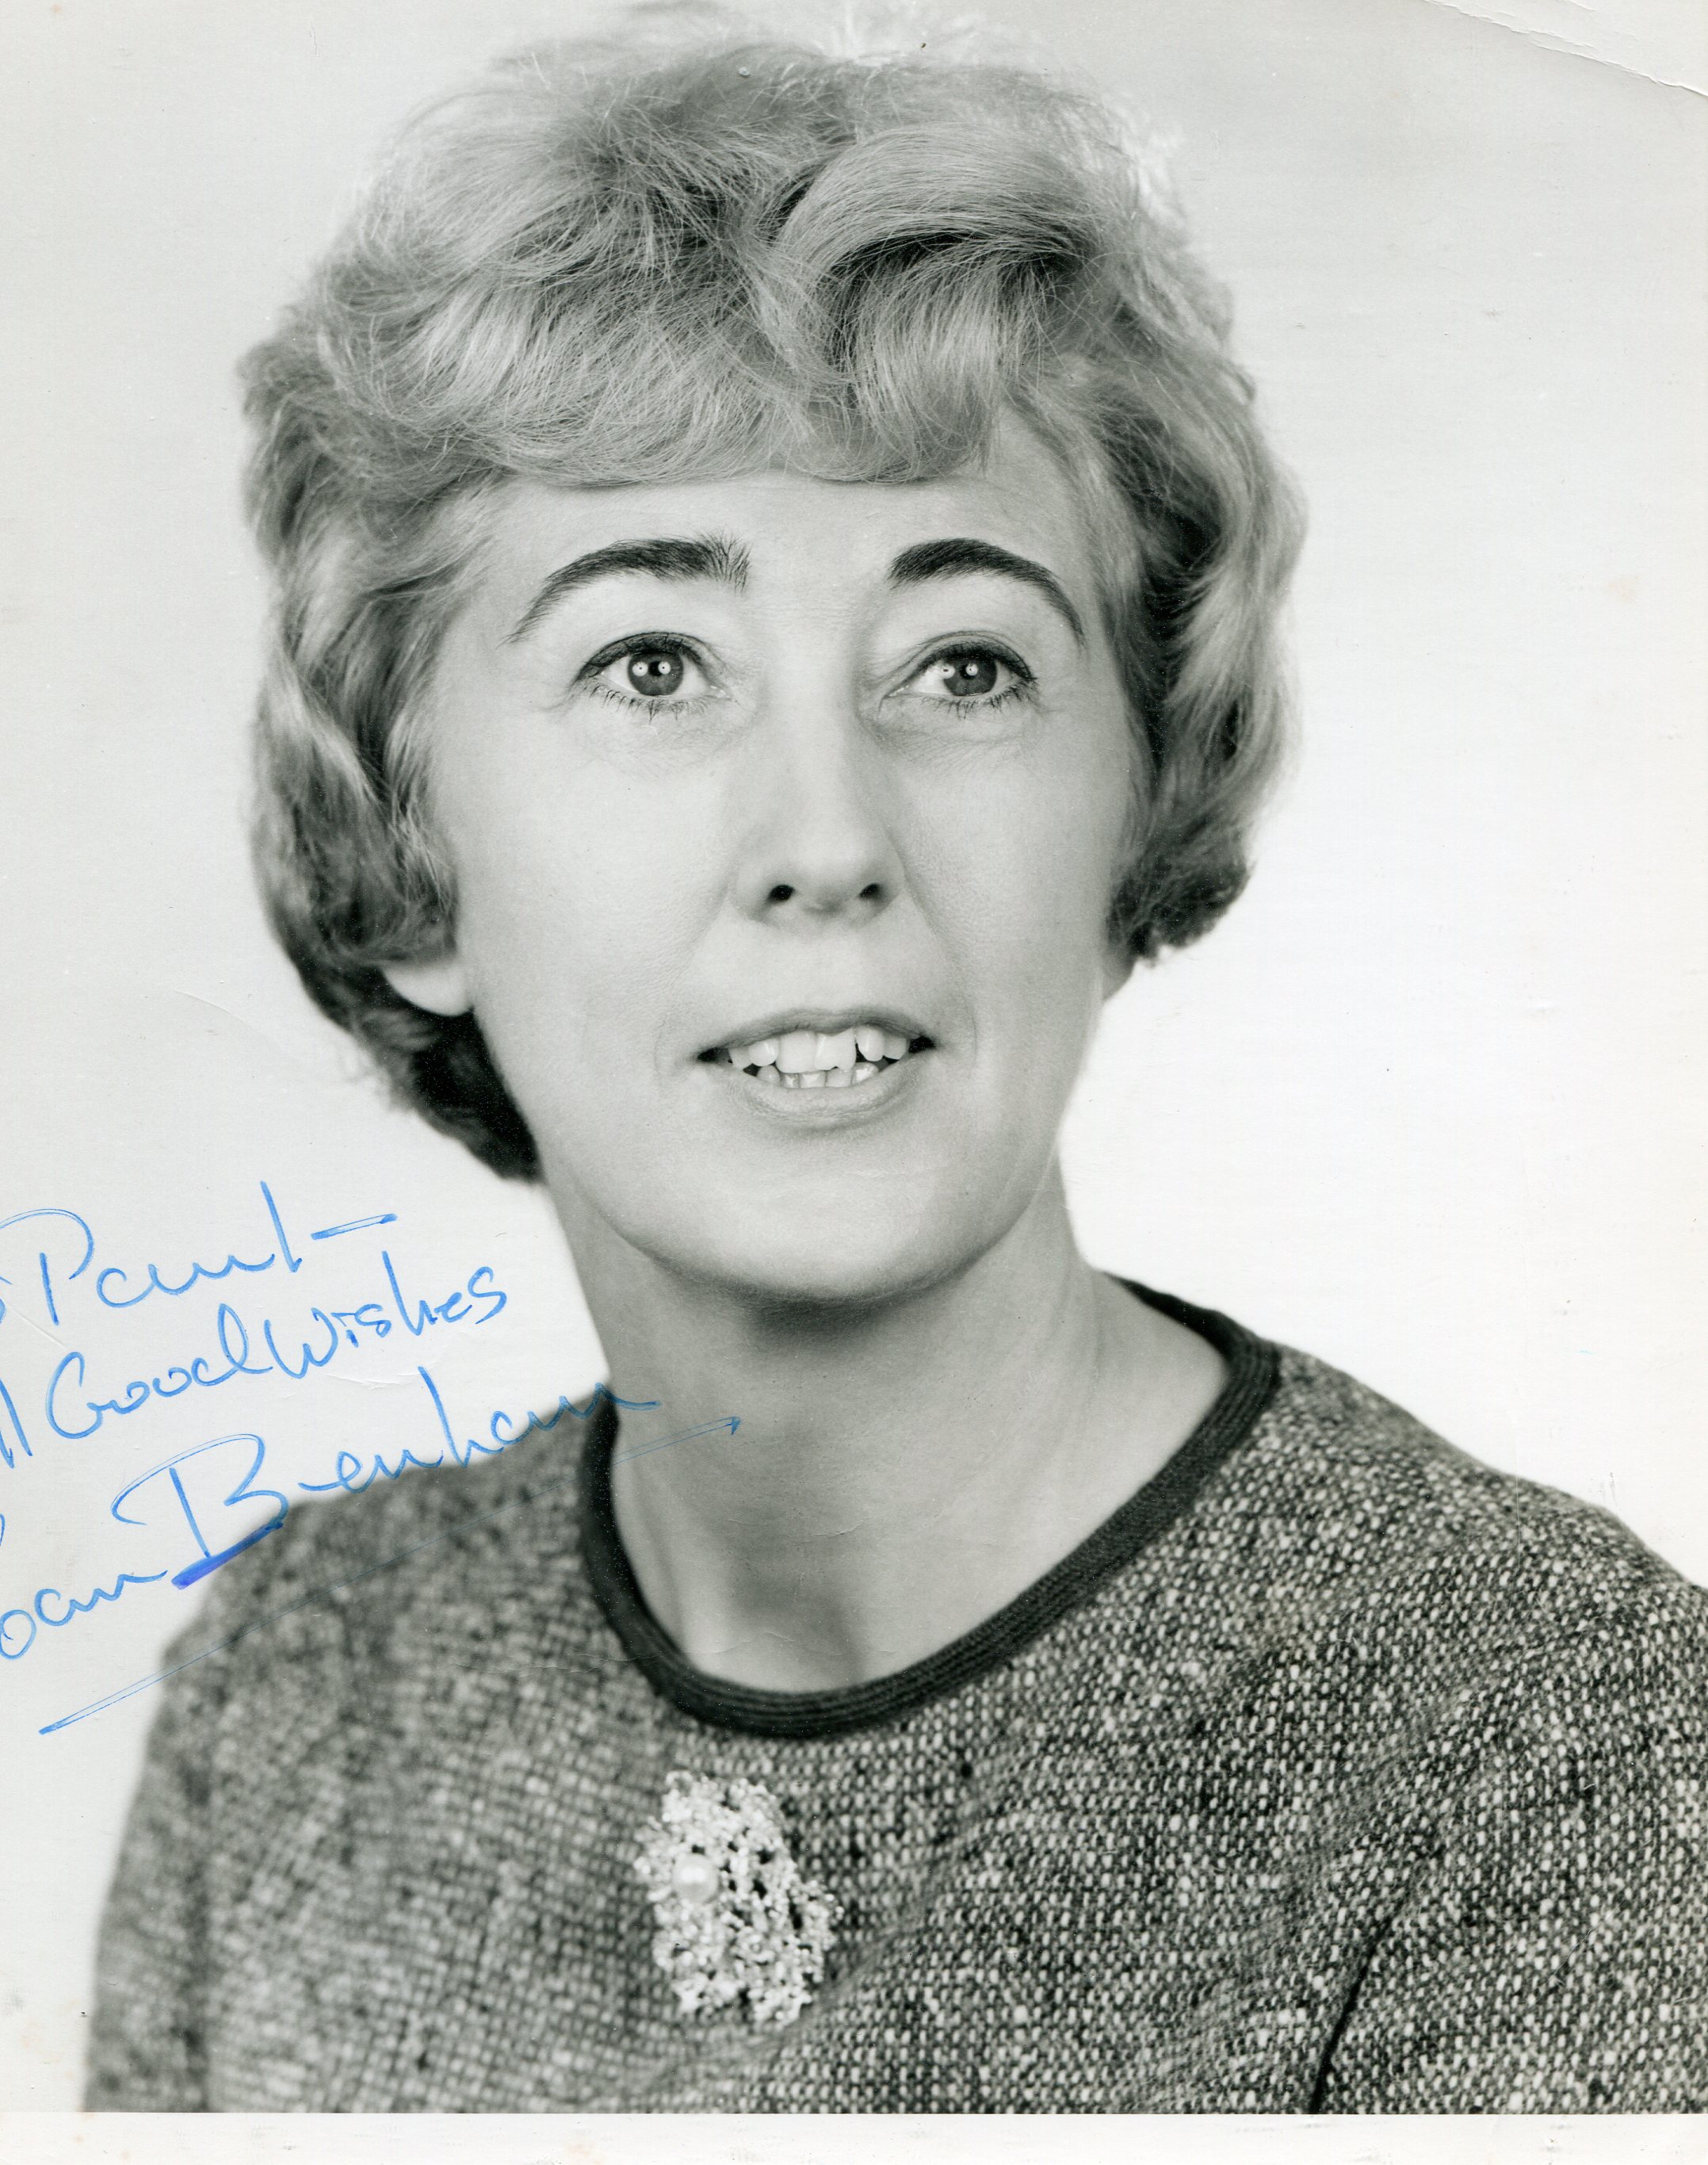 Joan Benham